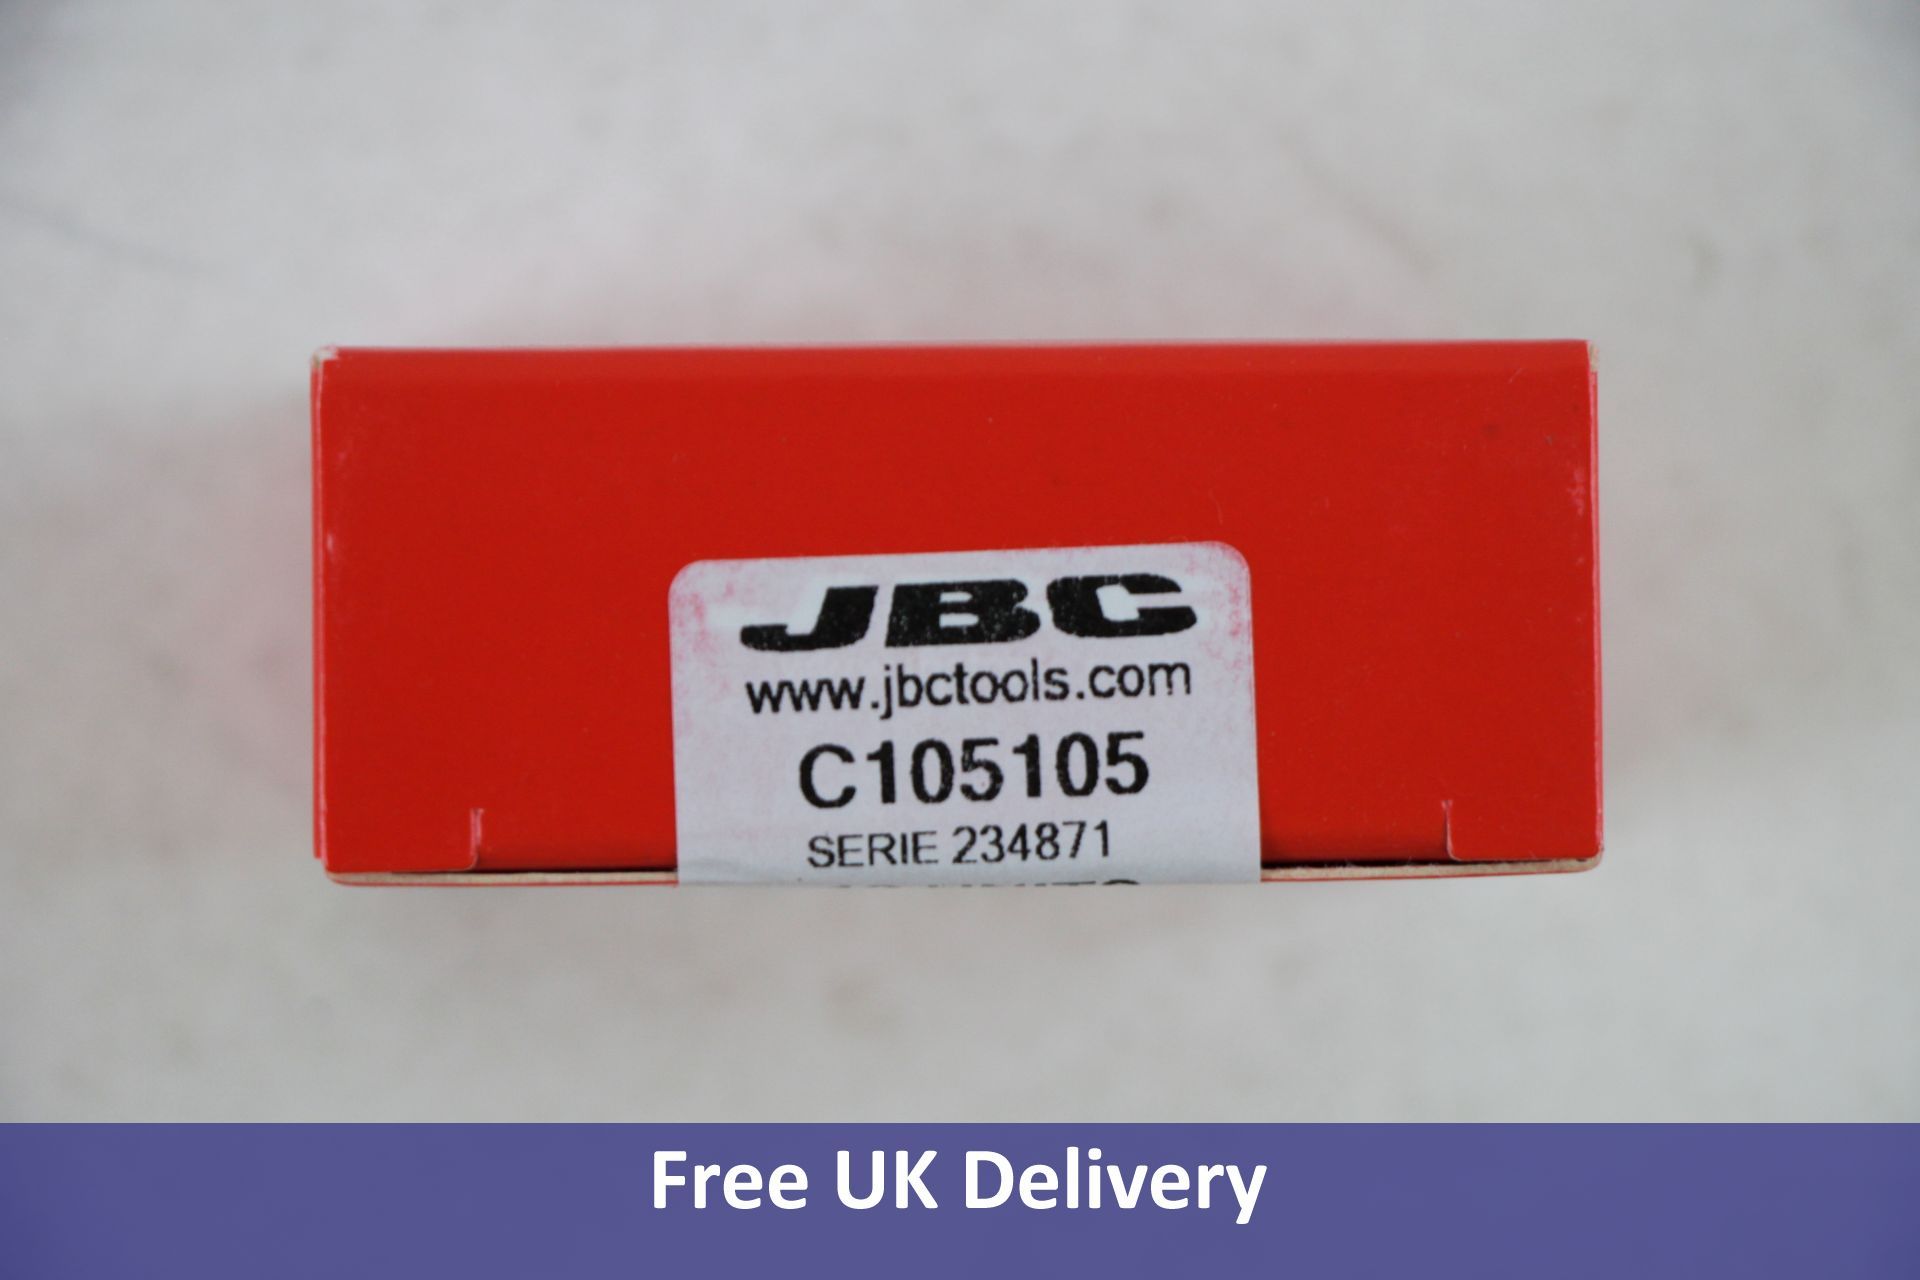 Box of Ten JBC C105105 Tip Cartridges, 0.3mm